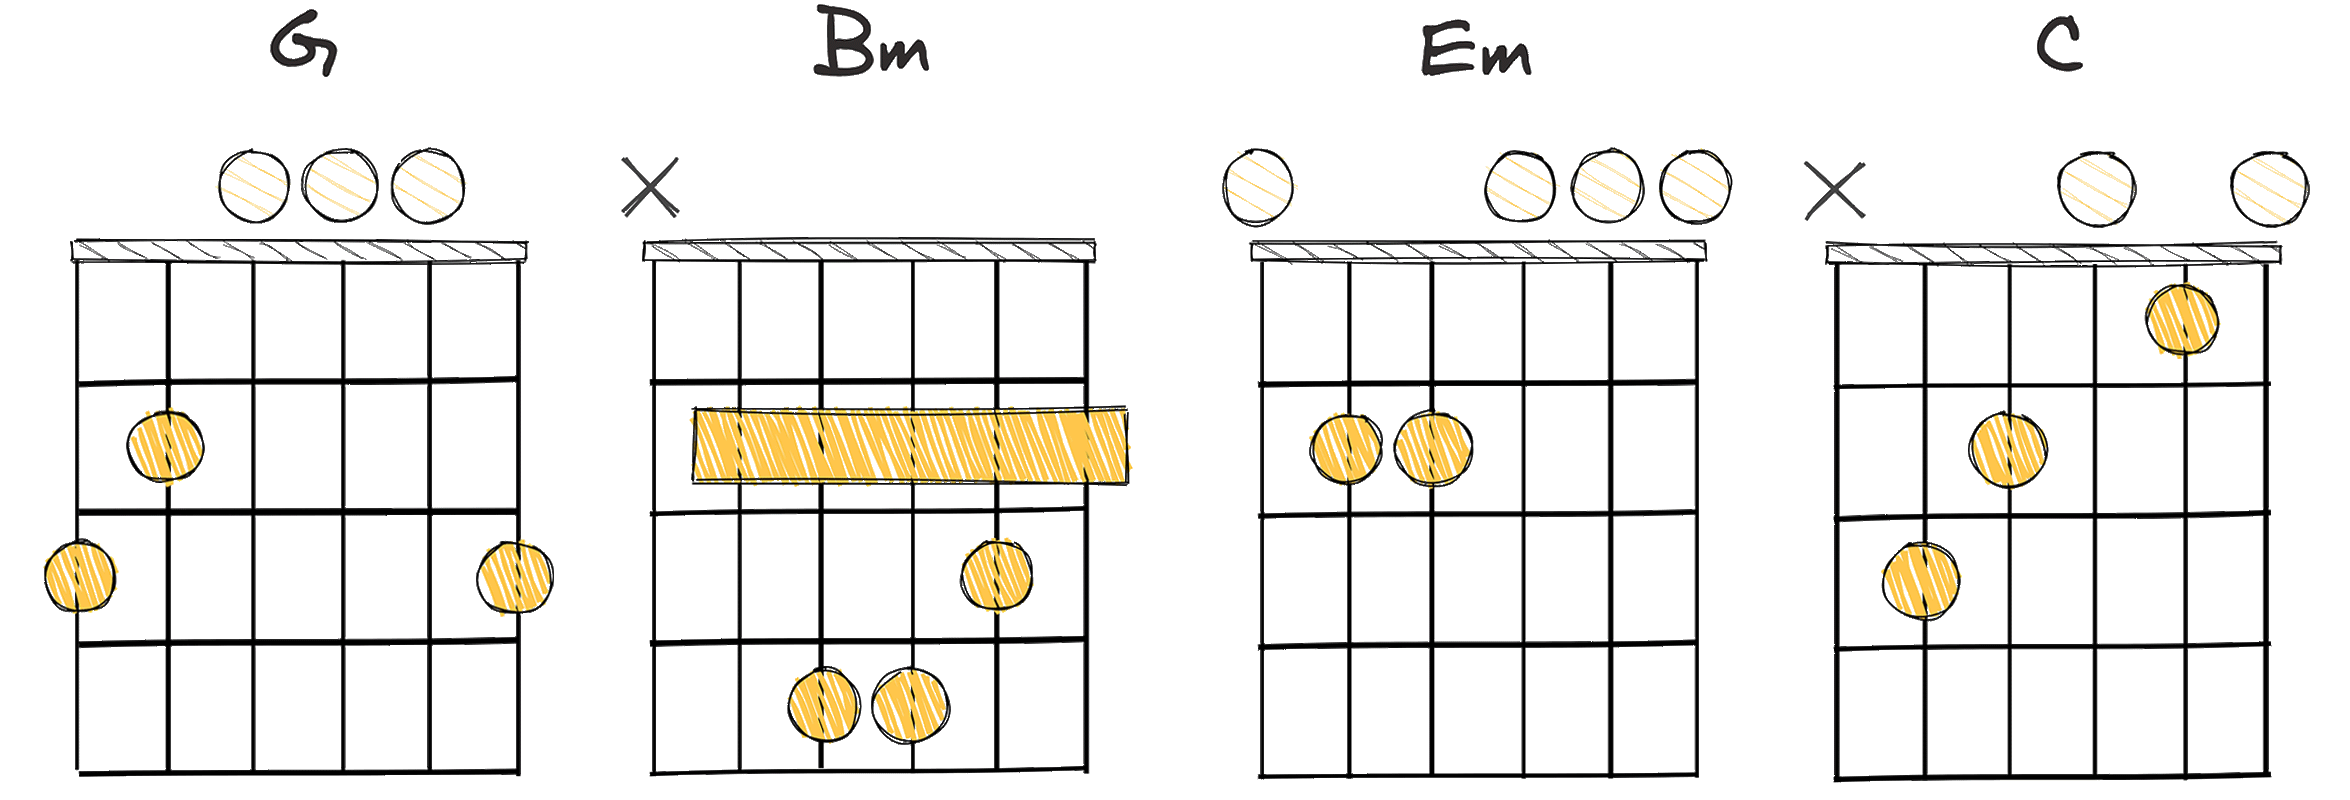 I-iii-vi-IV (1-3-6-4) chords diagram